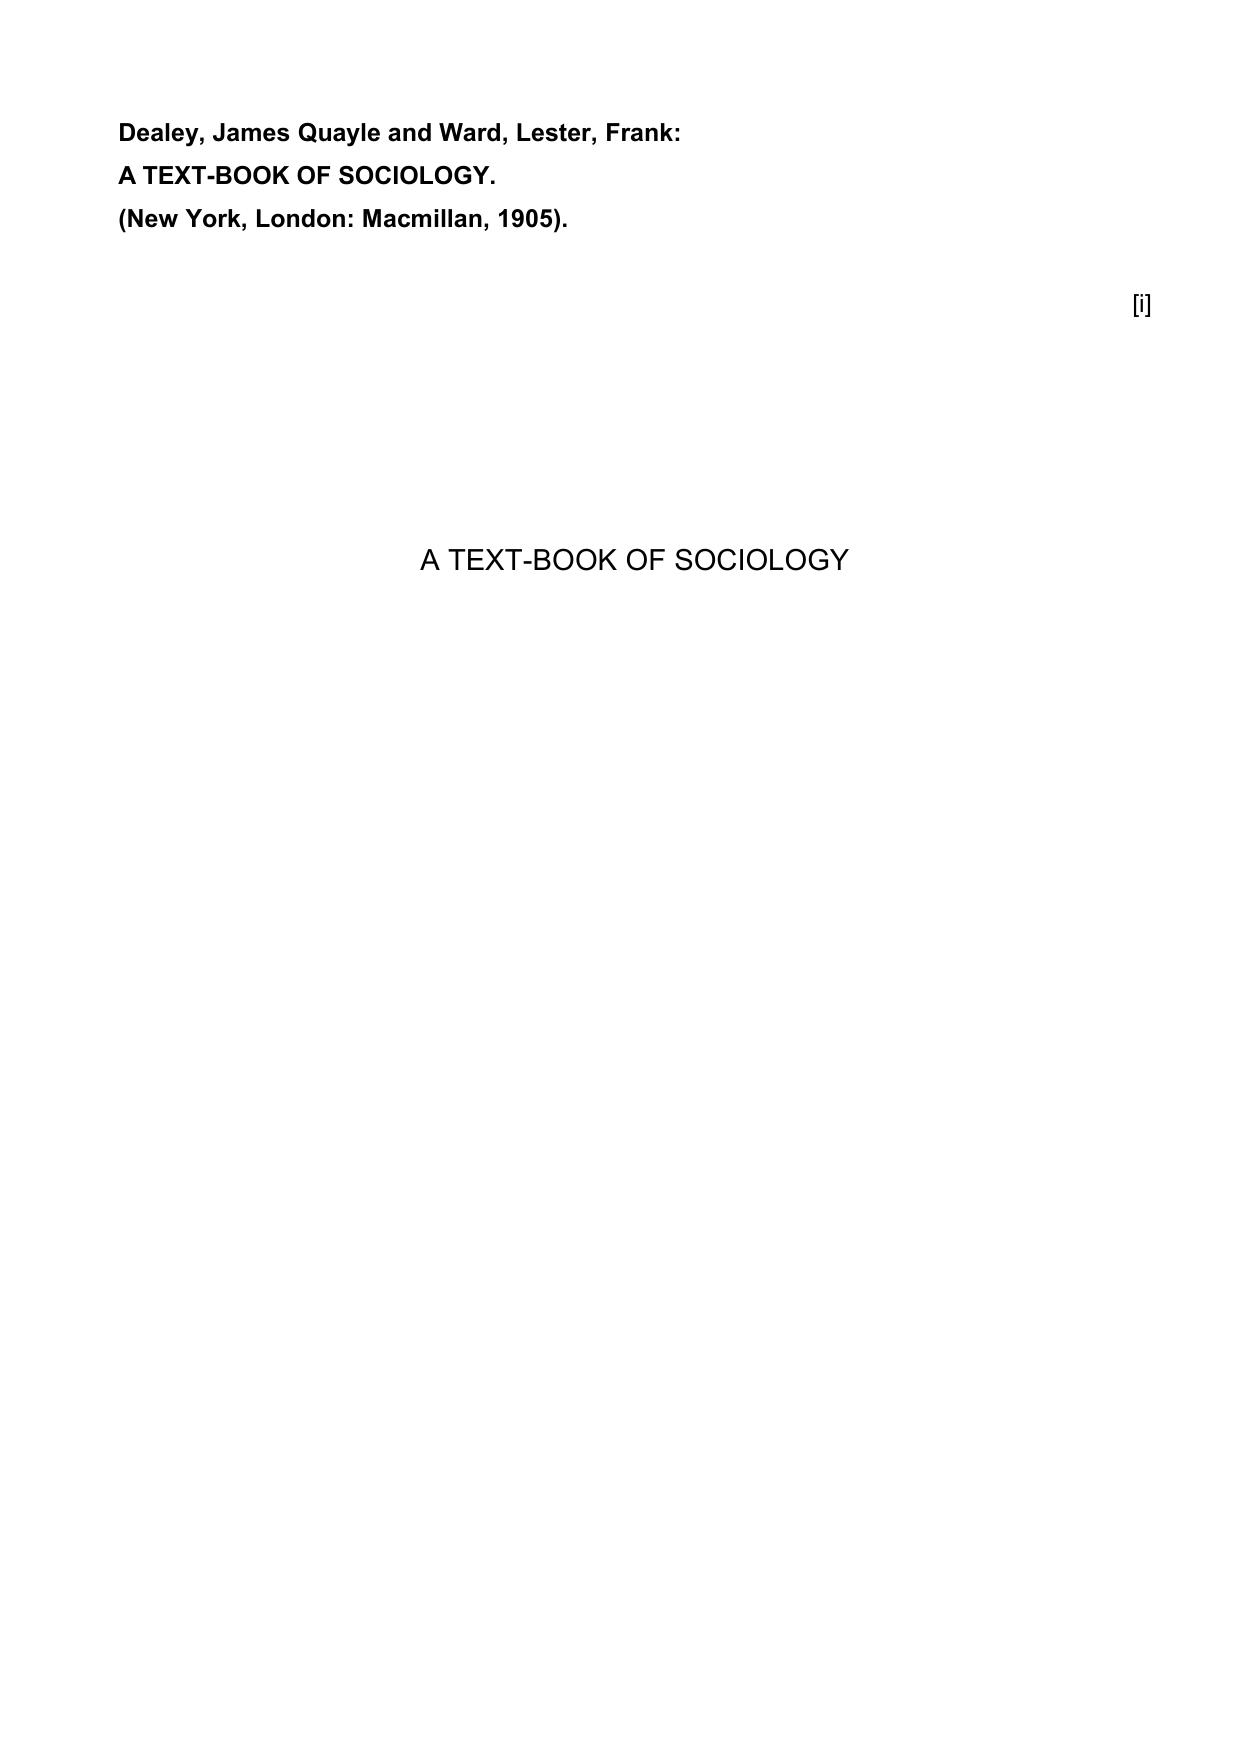 A TEXT-BOOK OF SOCIOLOGY